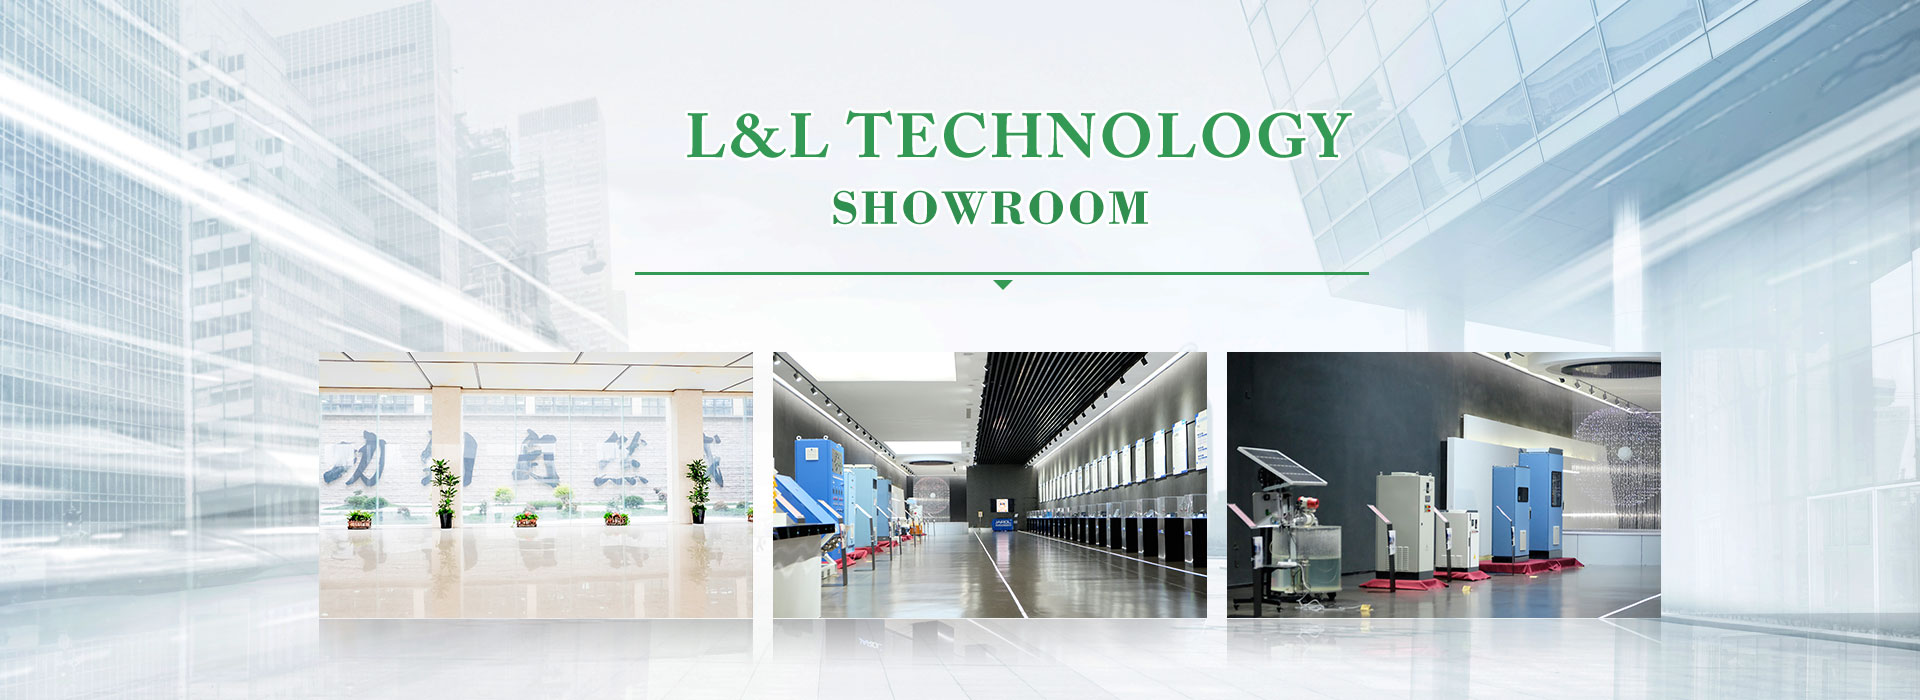 Zhejiang L&L Technology Co., Ltd. Showroom